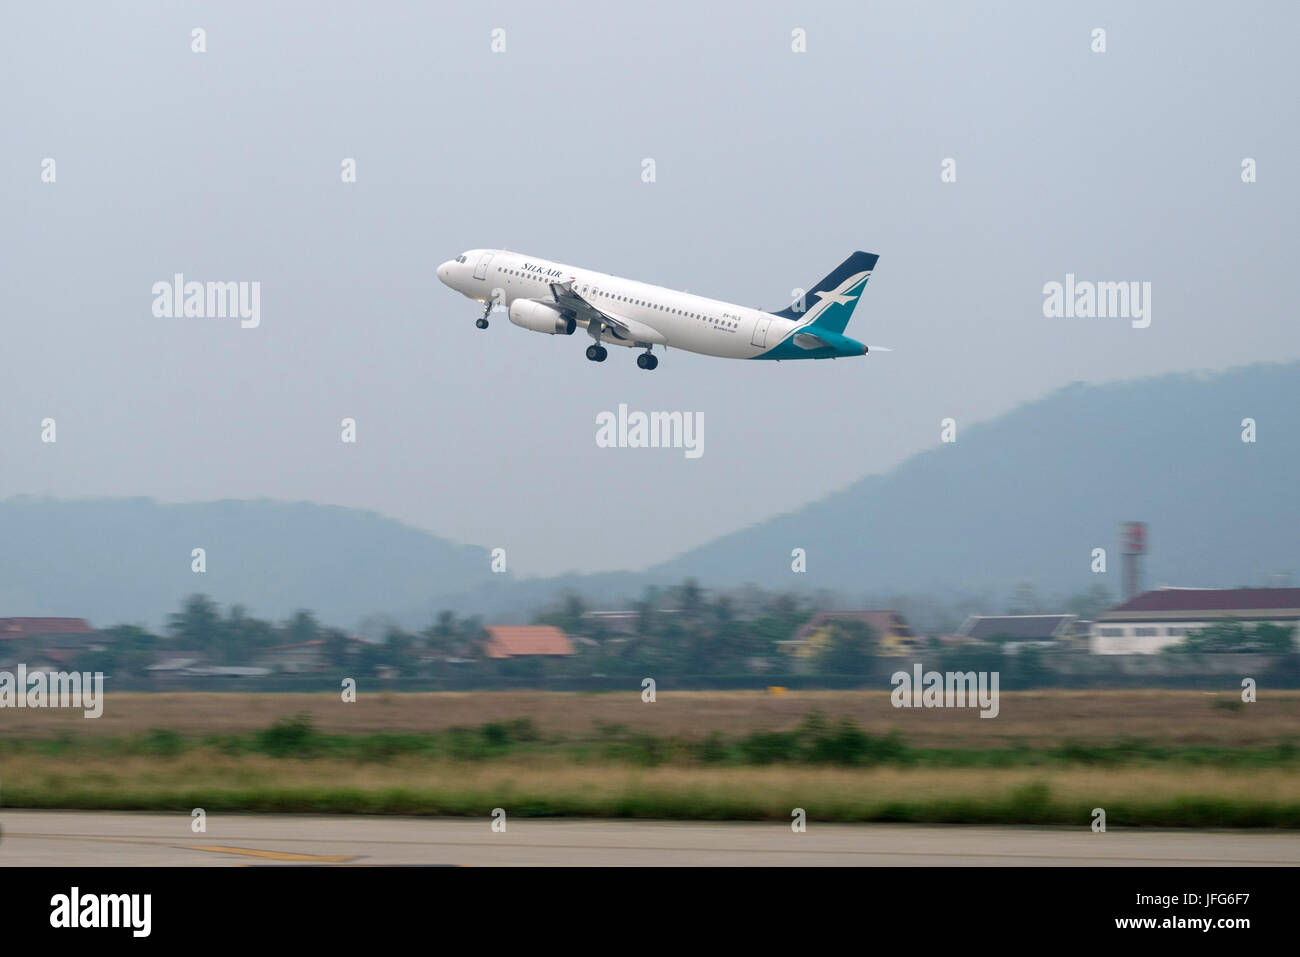 SilkAir airplane taking off Stock Photo